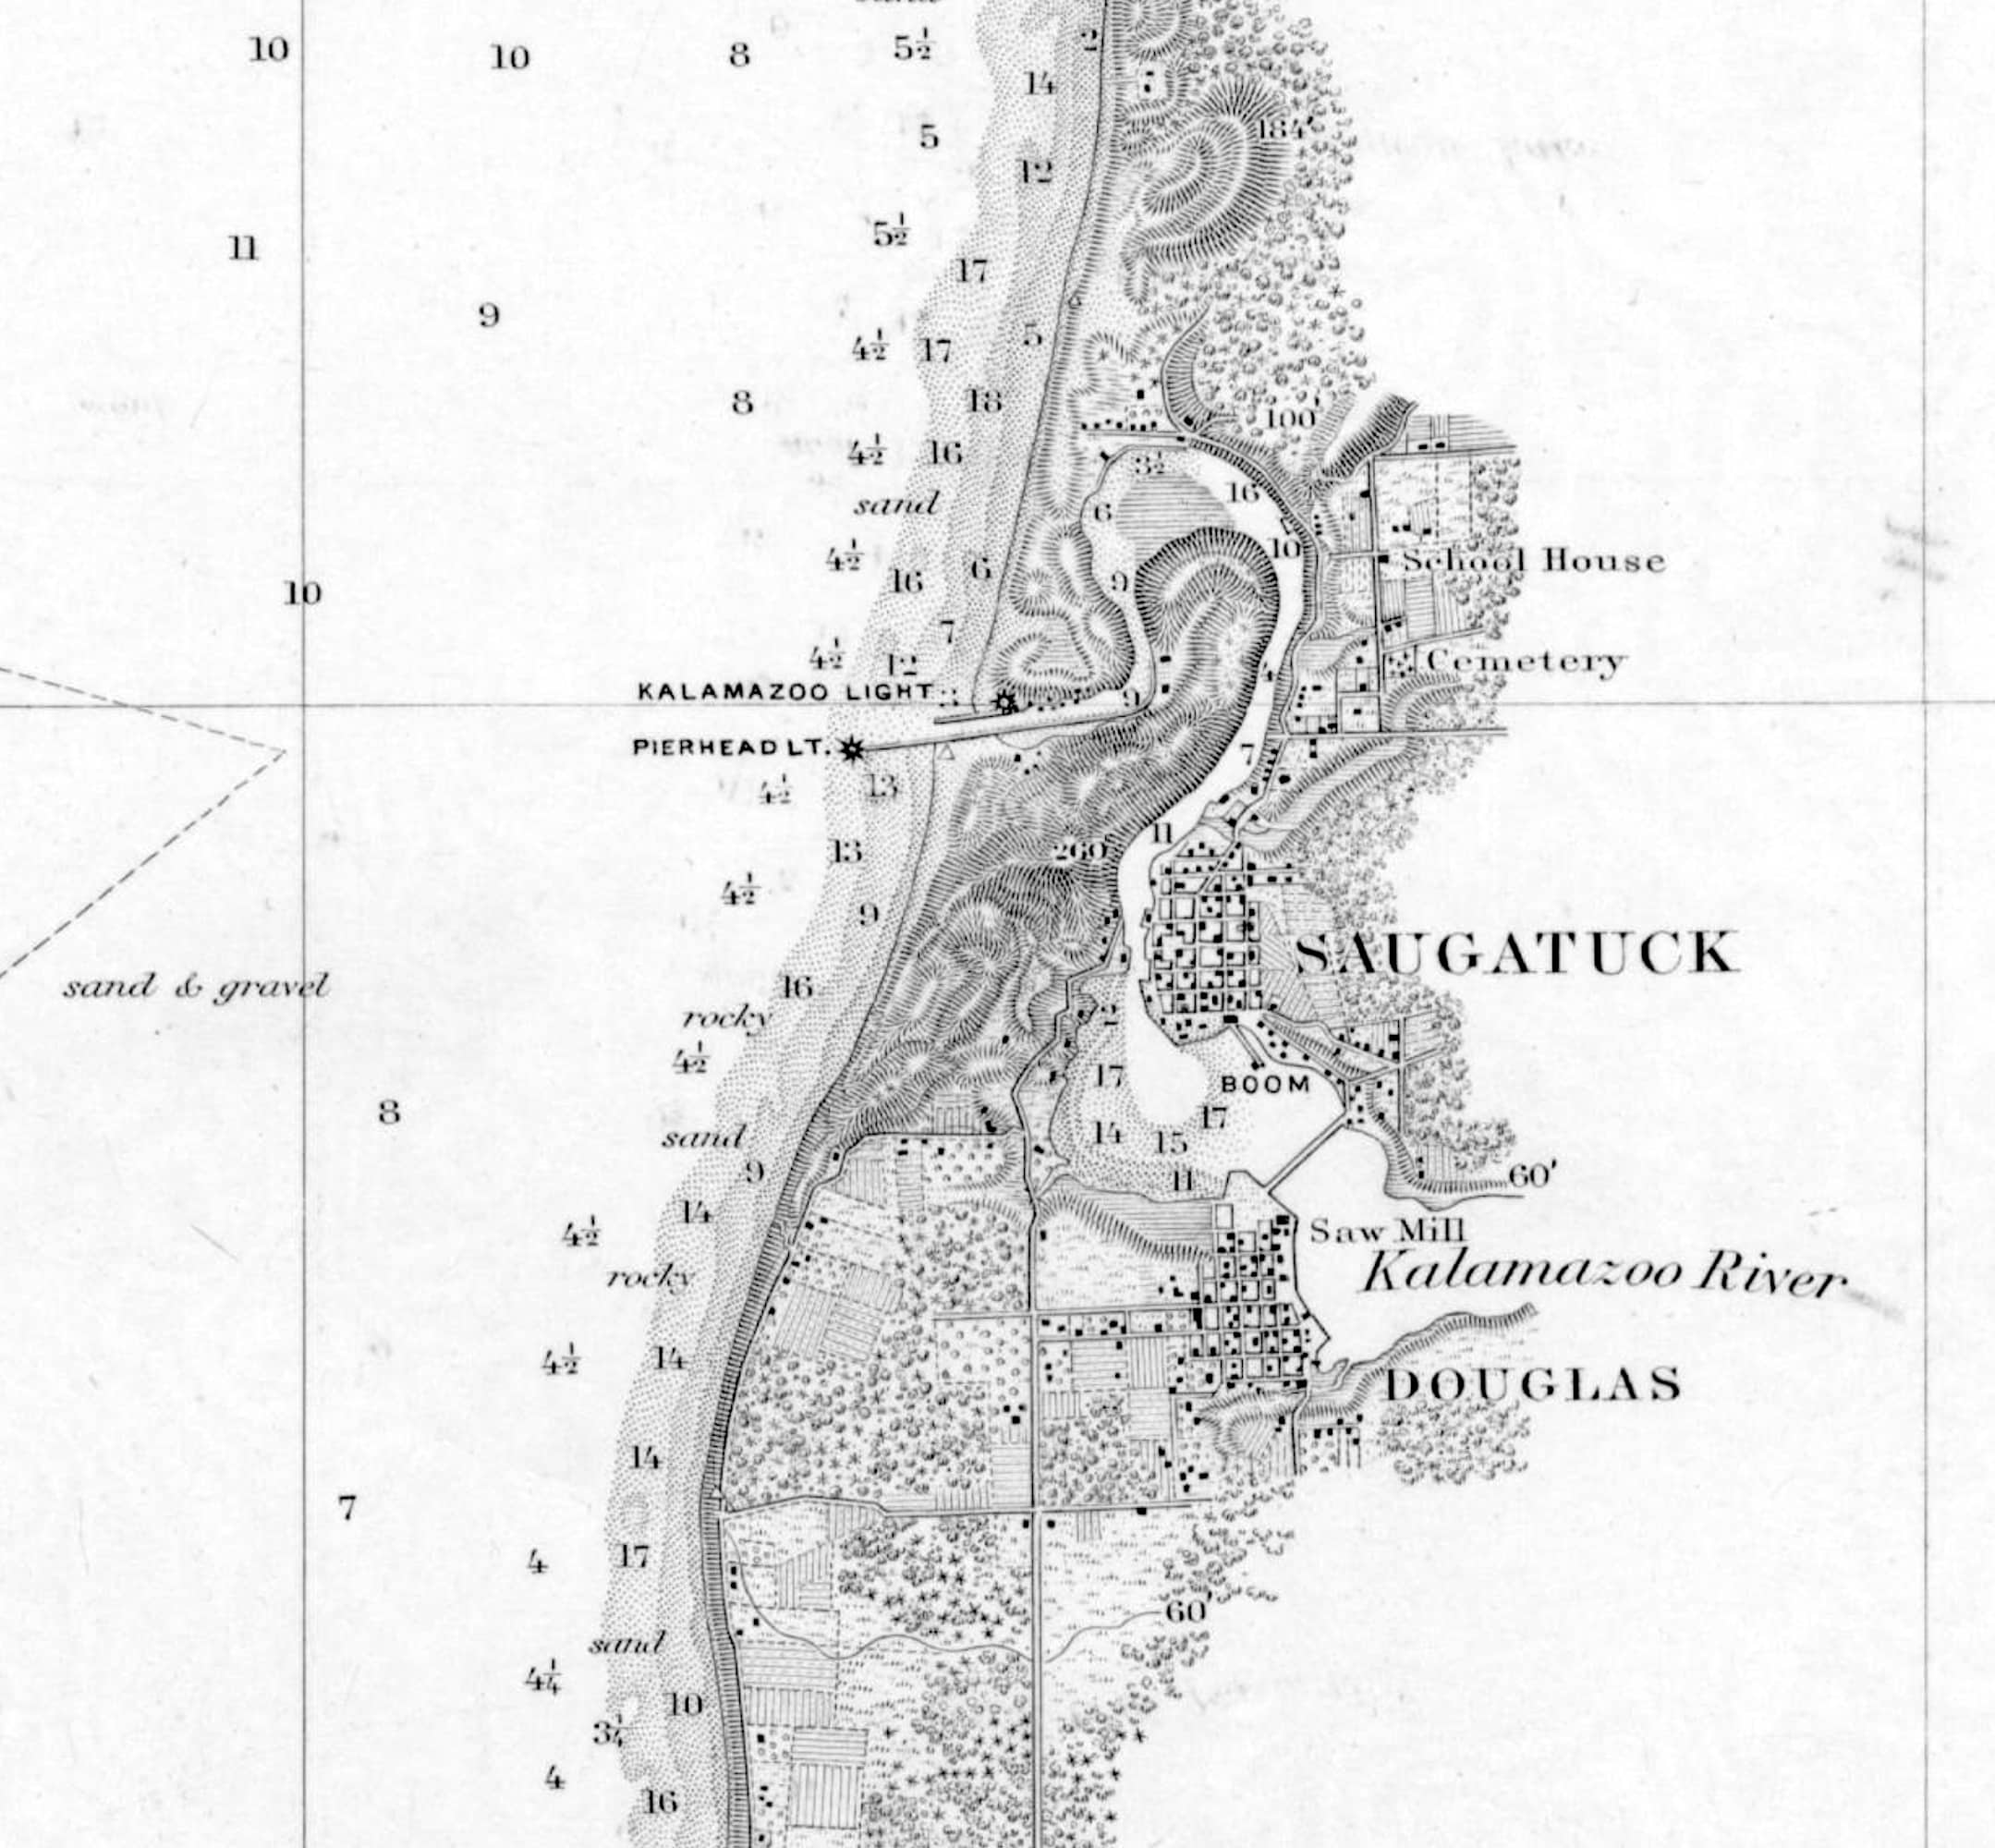 Saugatuck harbor on an 1895 nautical chart